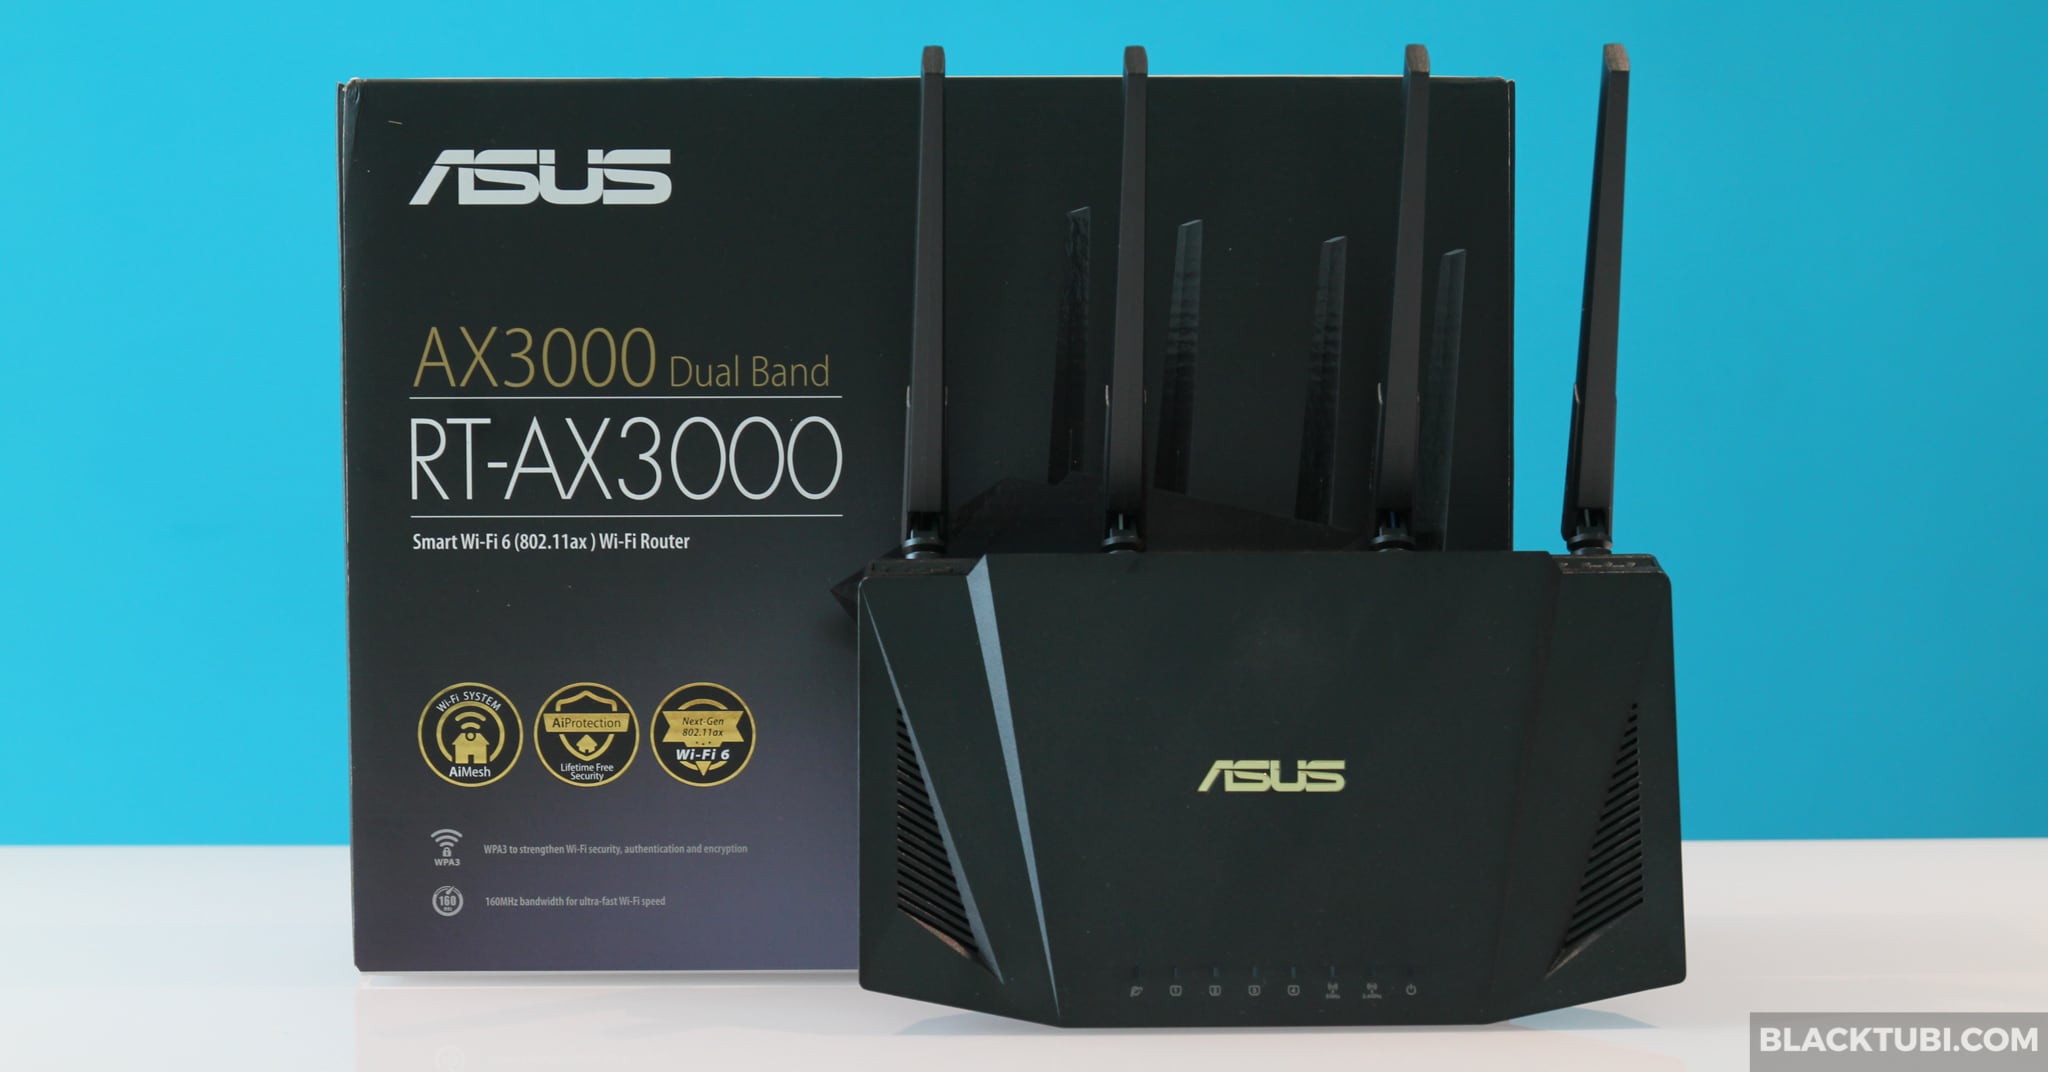 ASUS RT-AX3000 WiFi 6 Router Blacktubi